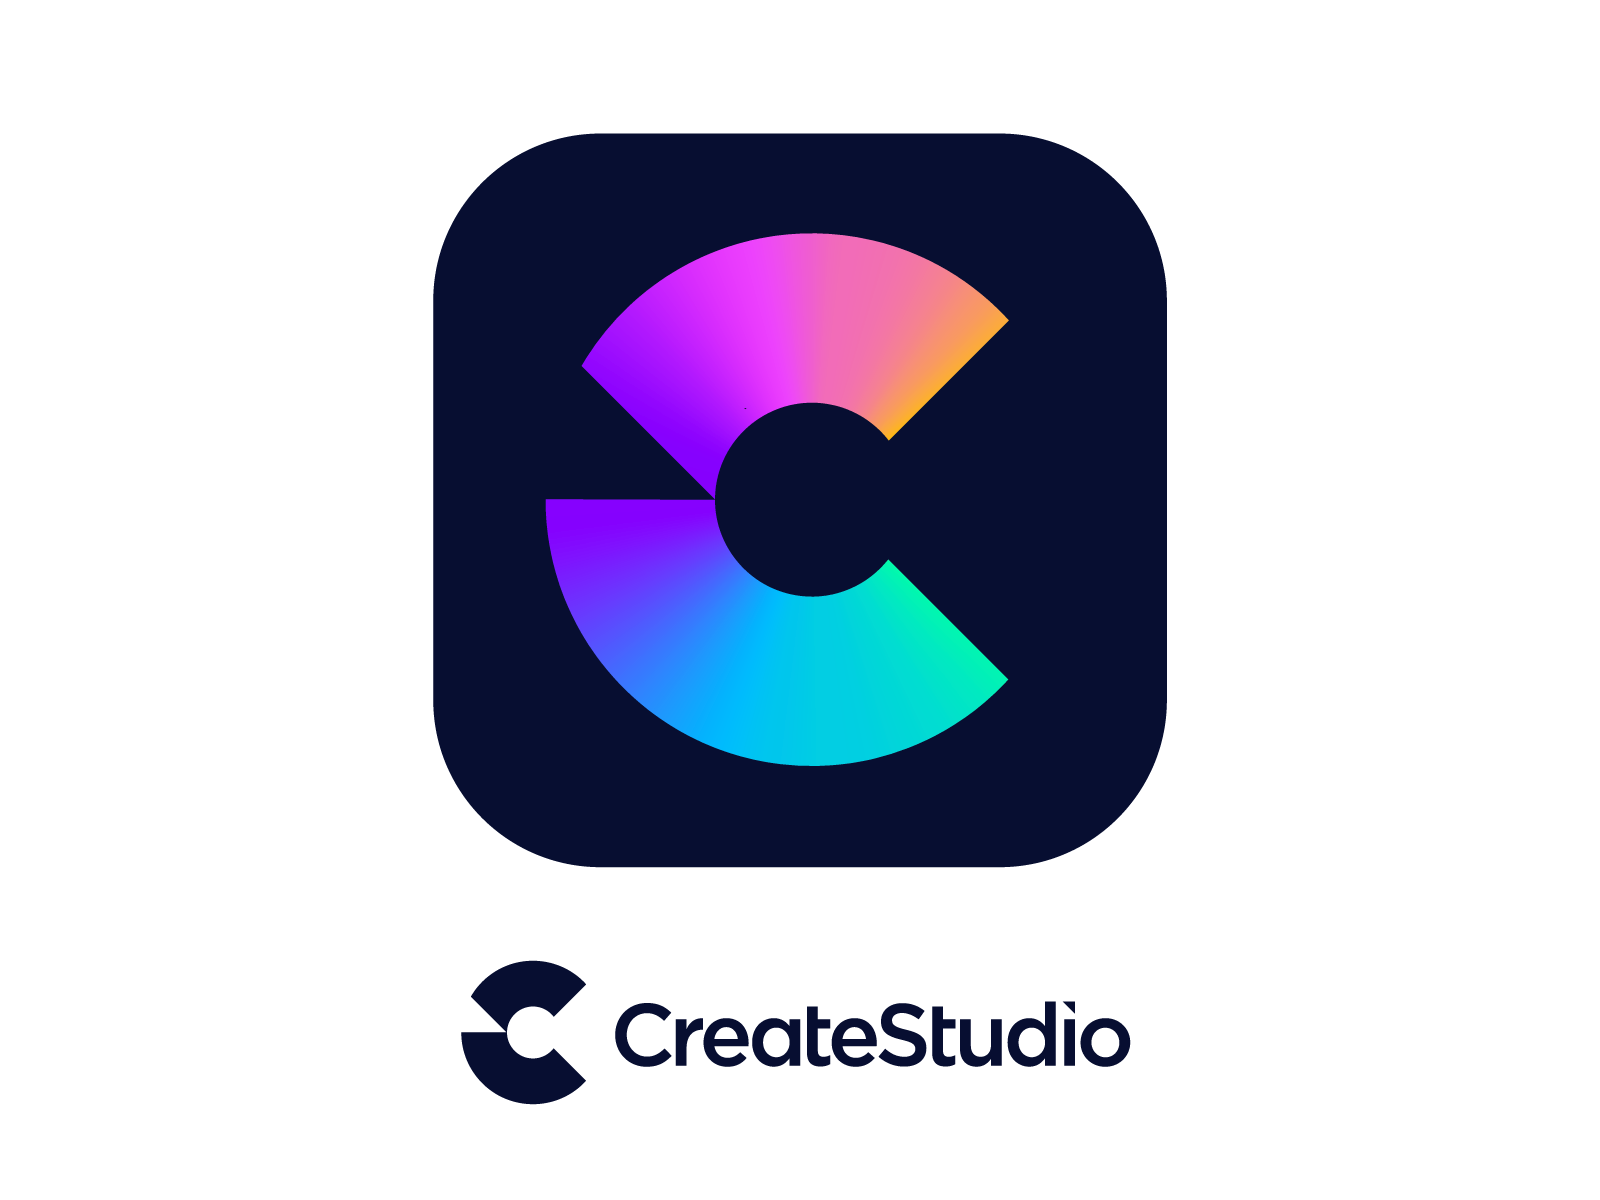 CreateStudio Approved Logo Design for Animation Software by Mihai Dolganiuc  on Dribbble